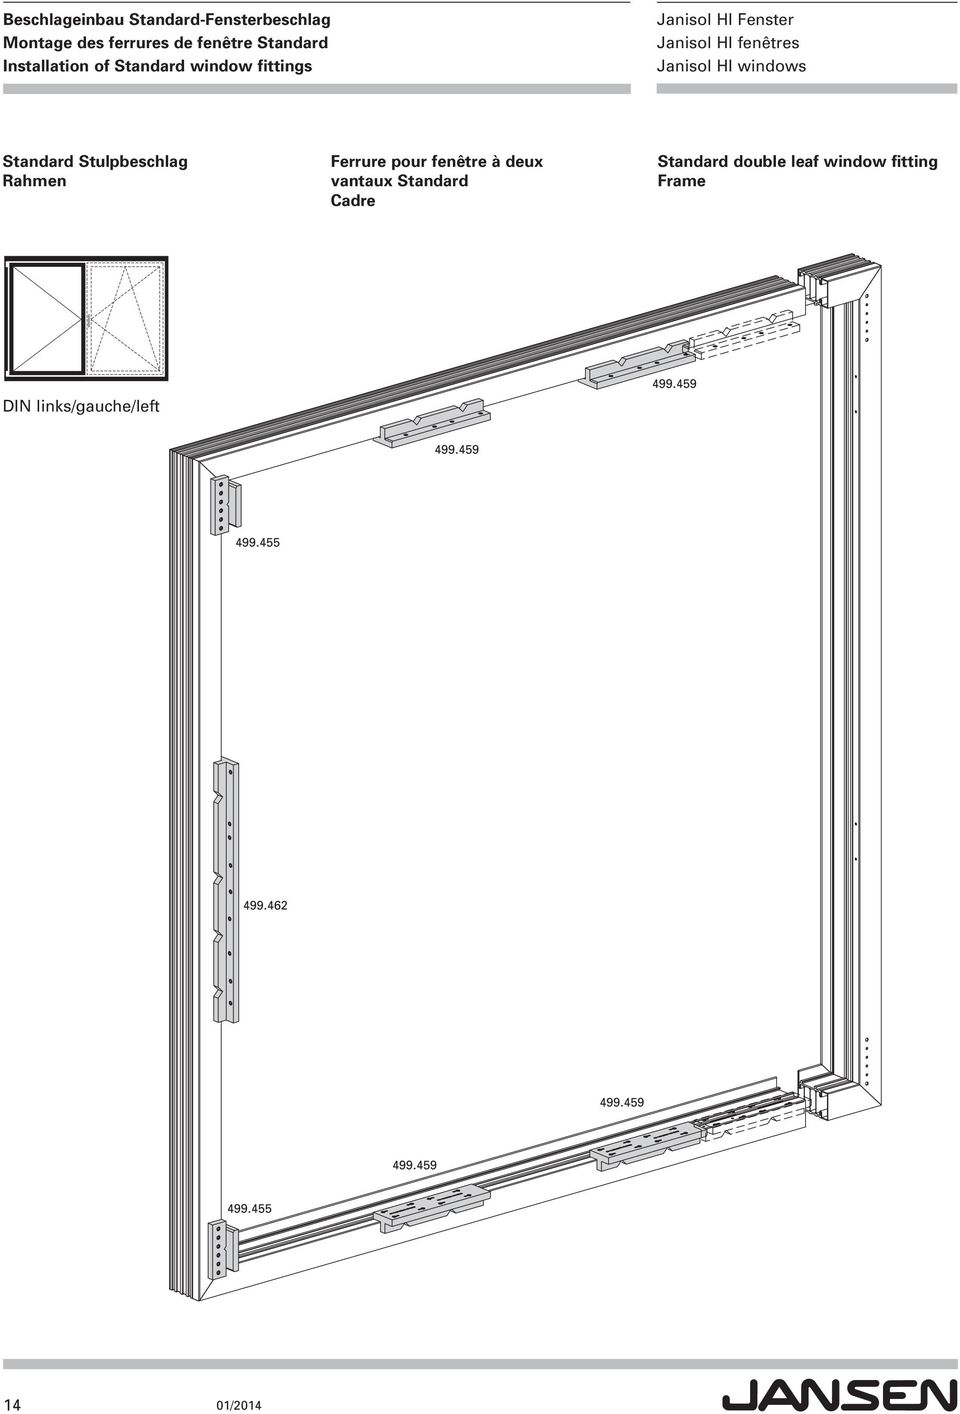 fenêtre à deux vantaux Standard Cadre Standard double leaf window fitting Frame DIN